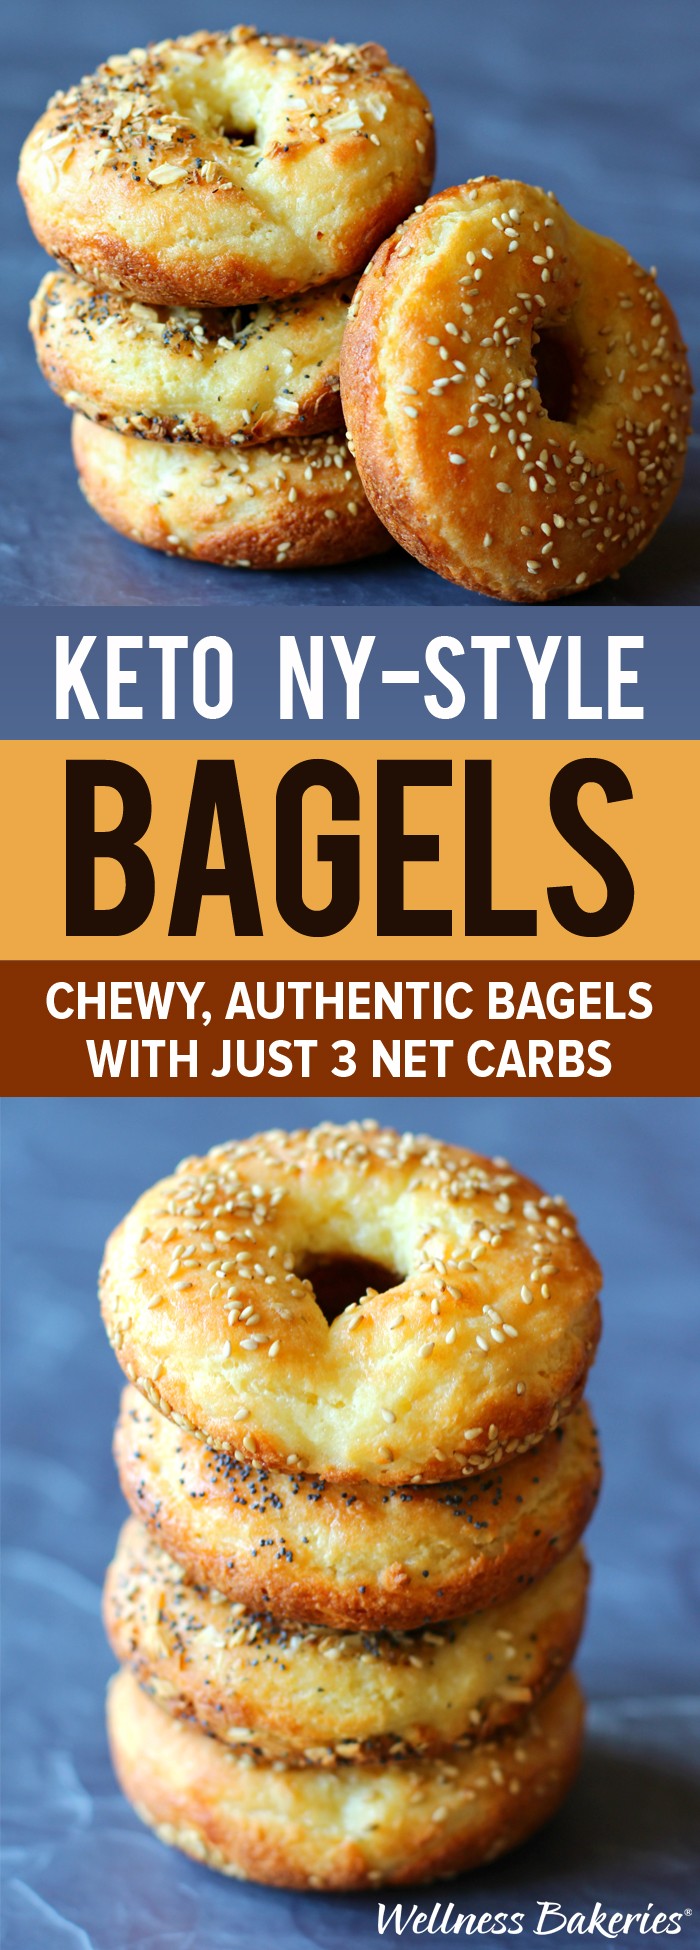 Keto Bagels - Wellness Bakeries